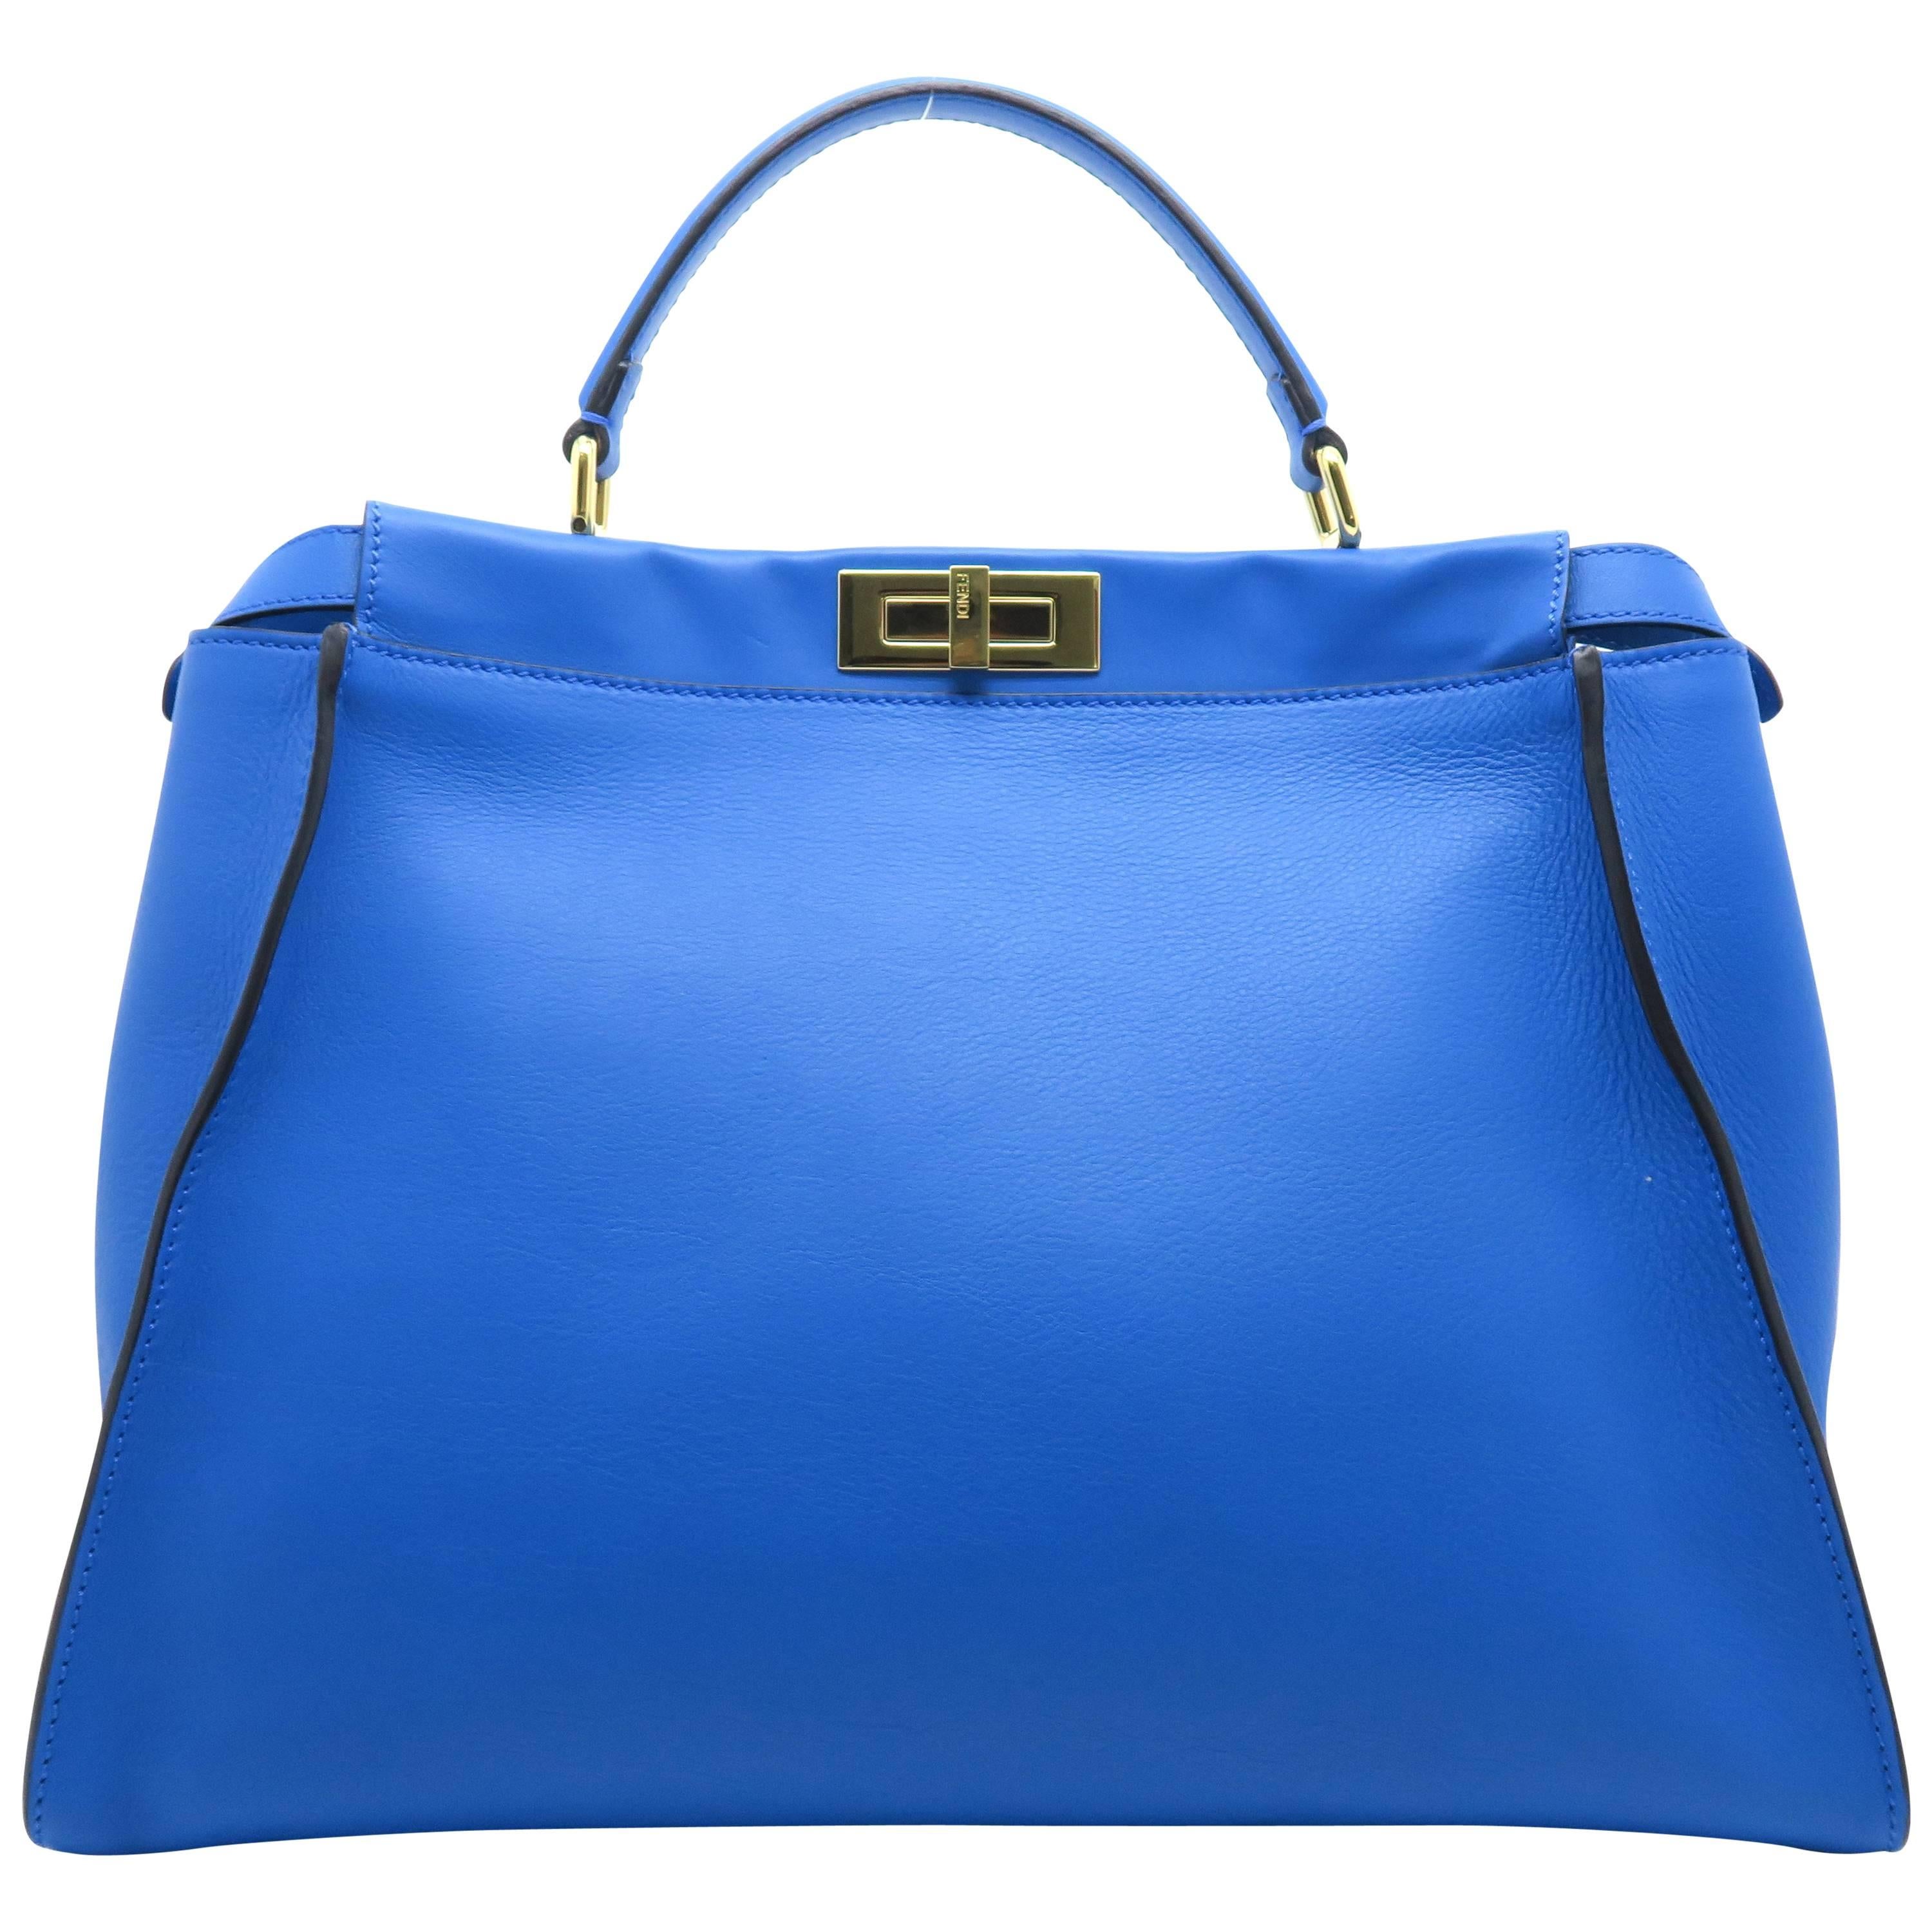 Fendi Peekaboo Blue Calfskin Leather Gold Metal Top Handle Bag